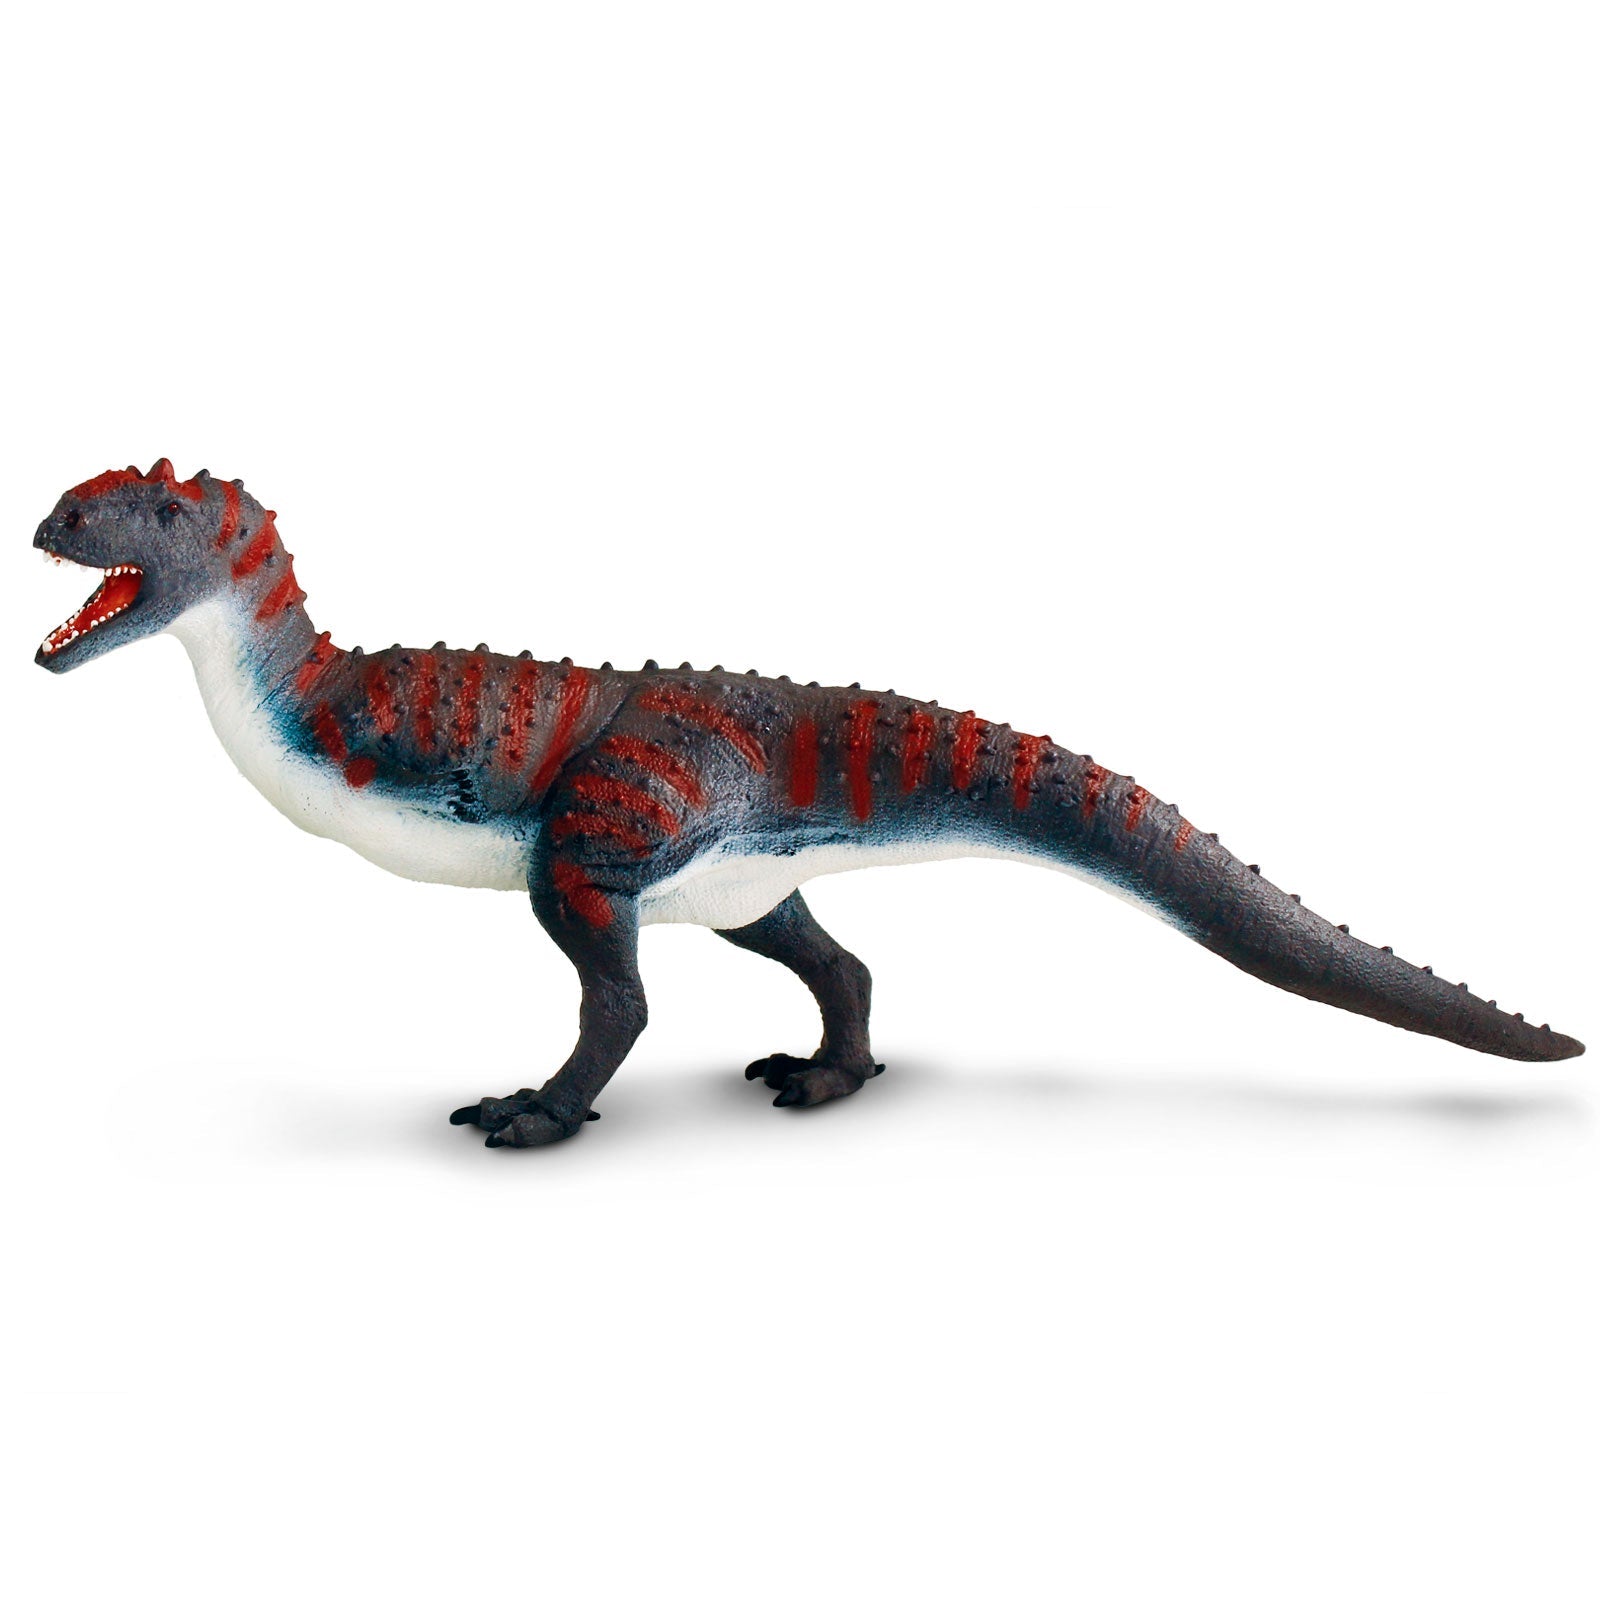 majungasaurus size